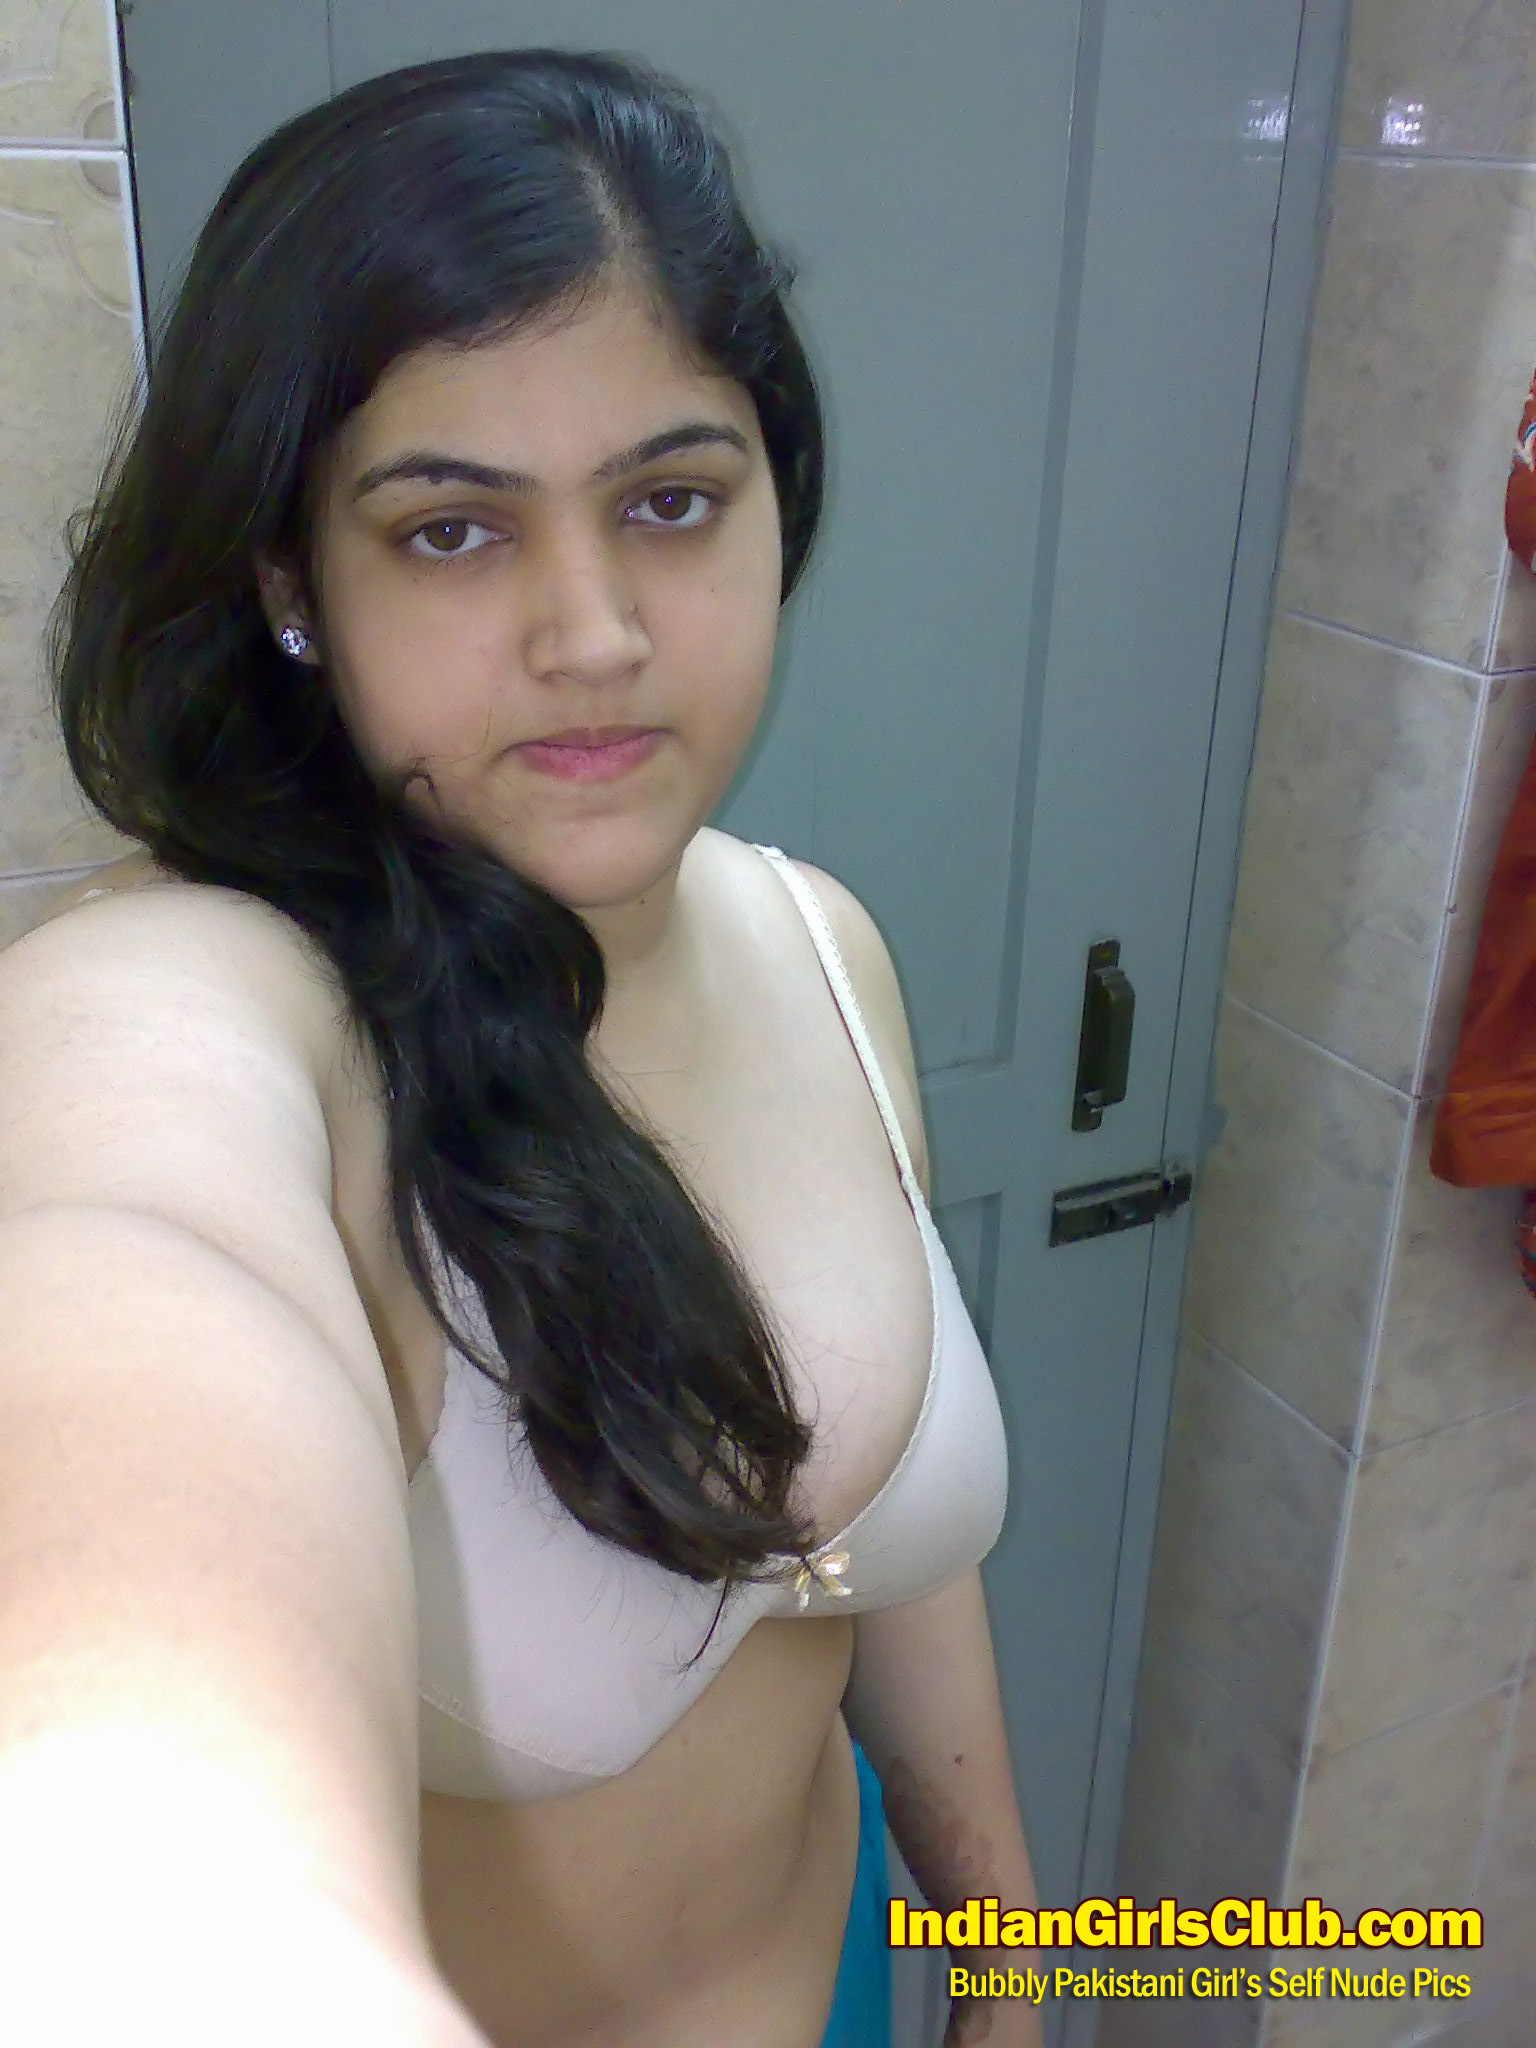 Desi Naked Pakistani Girls - pakistani girls nude 3 - Indian Girls Club - Nude Indian Girls & Hot Sexy  Indian Babes